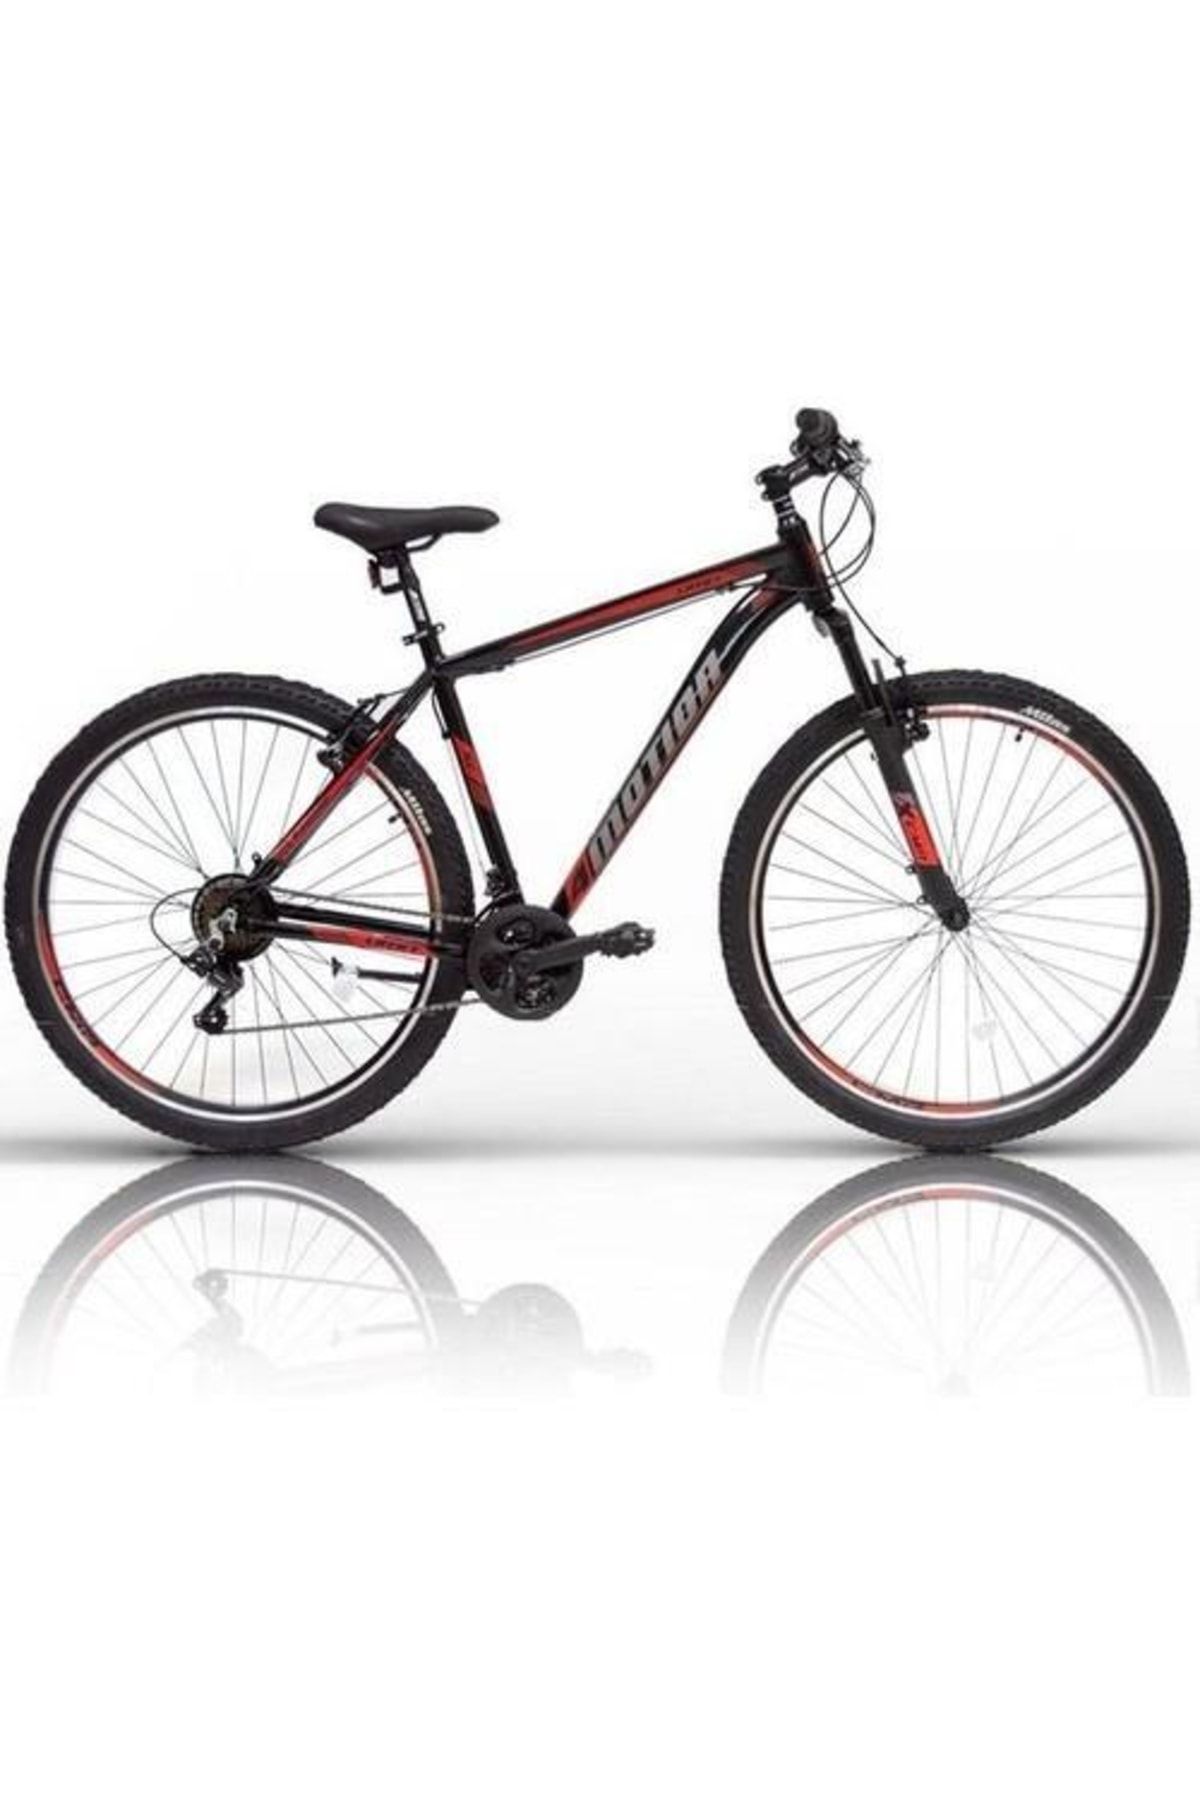 Ümit Bisiklet Ümit Motion 29 Jant 18k V Dağ Bisikleti Siyah - Kırmızı